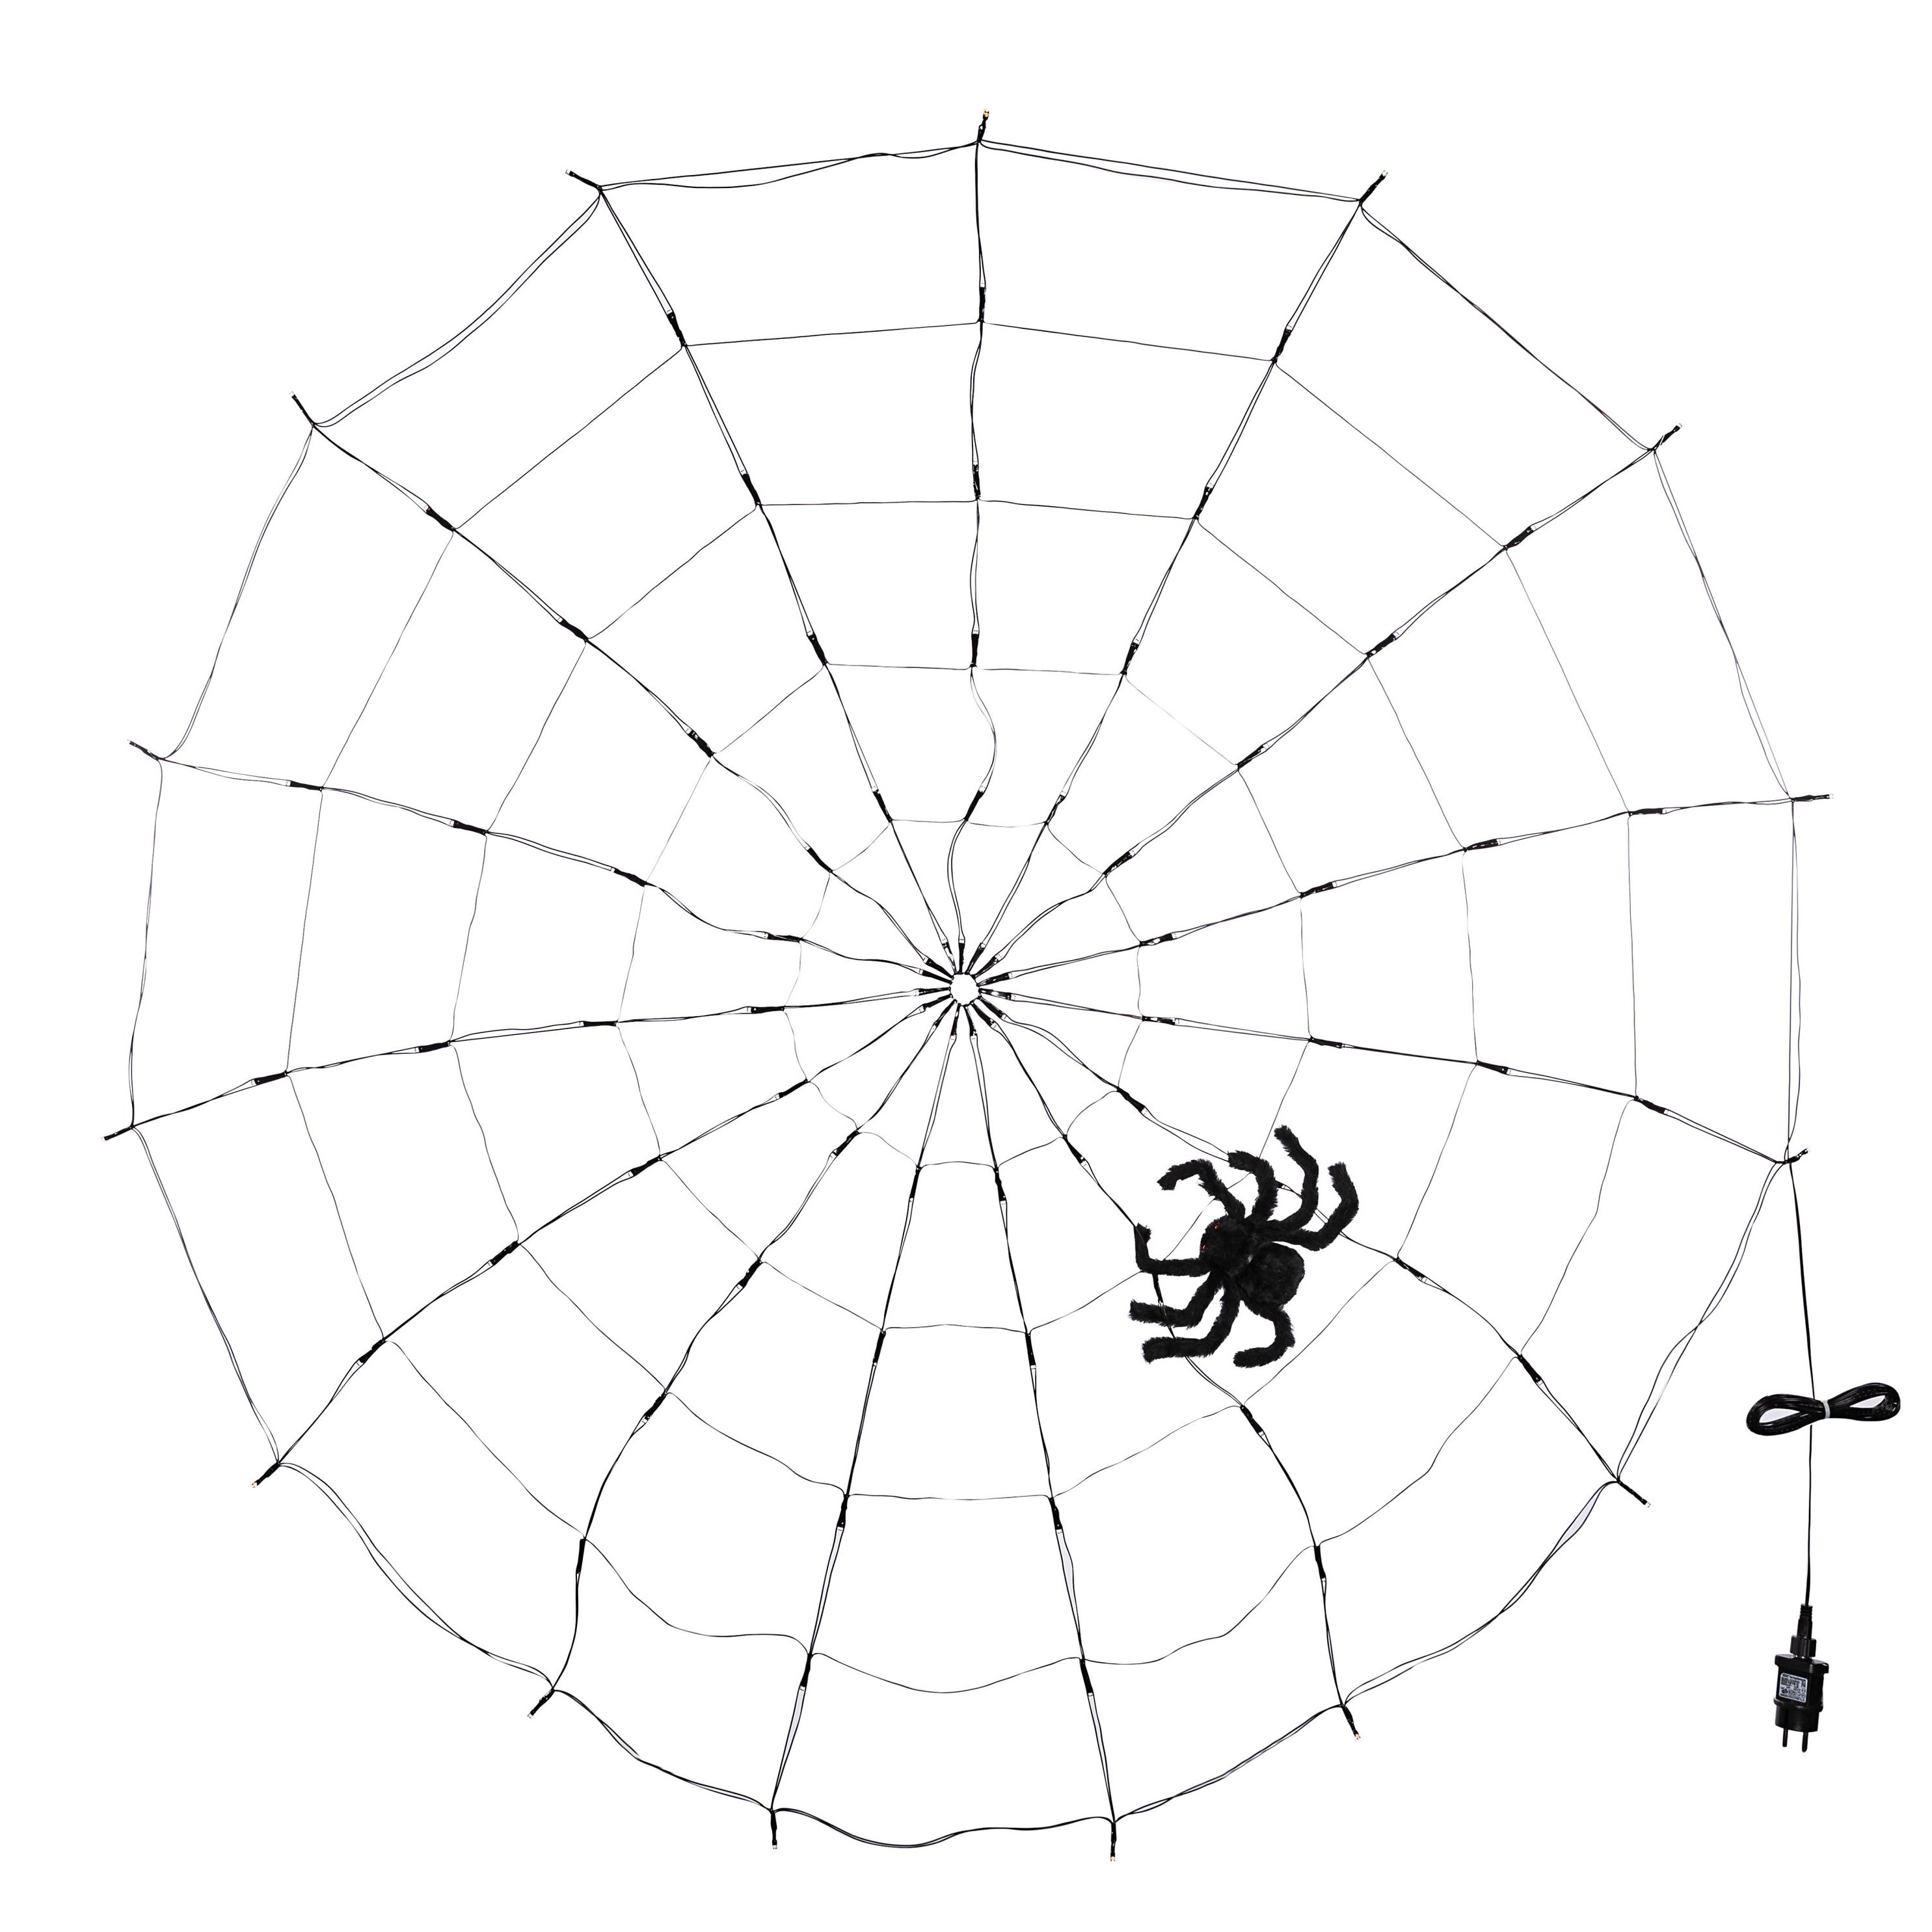 LED-Spinnennetz inkl. Spinne jetzt bei Weltbild.de bestellen